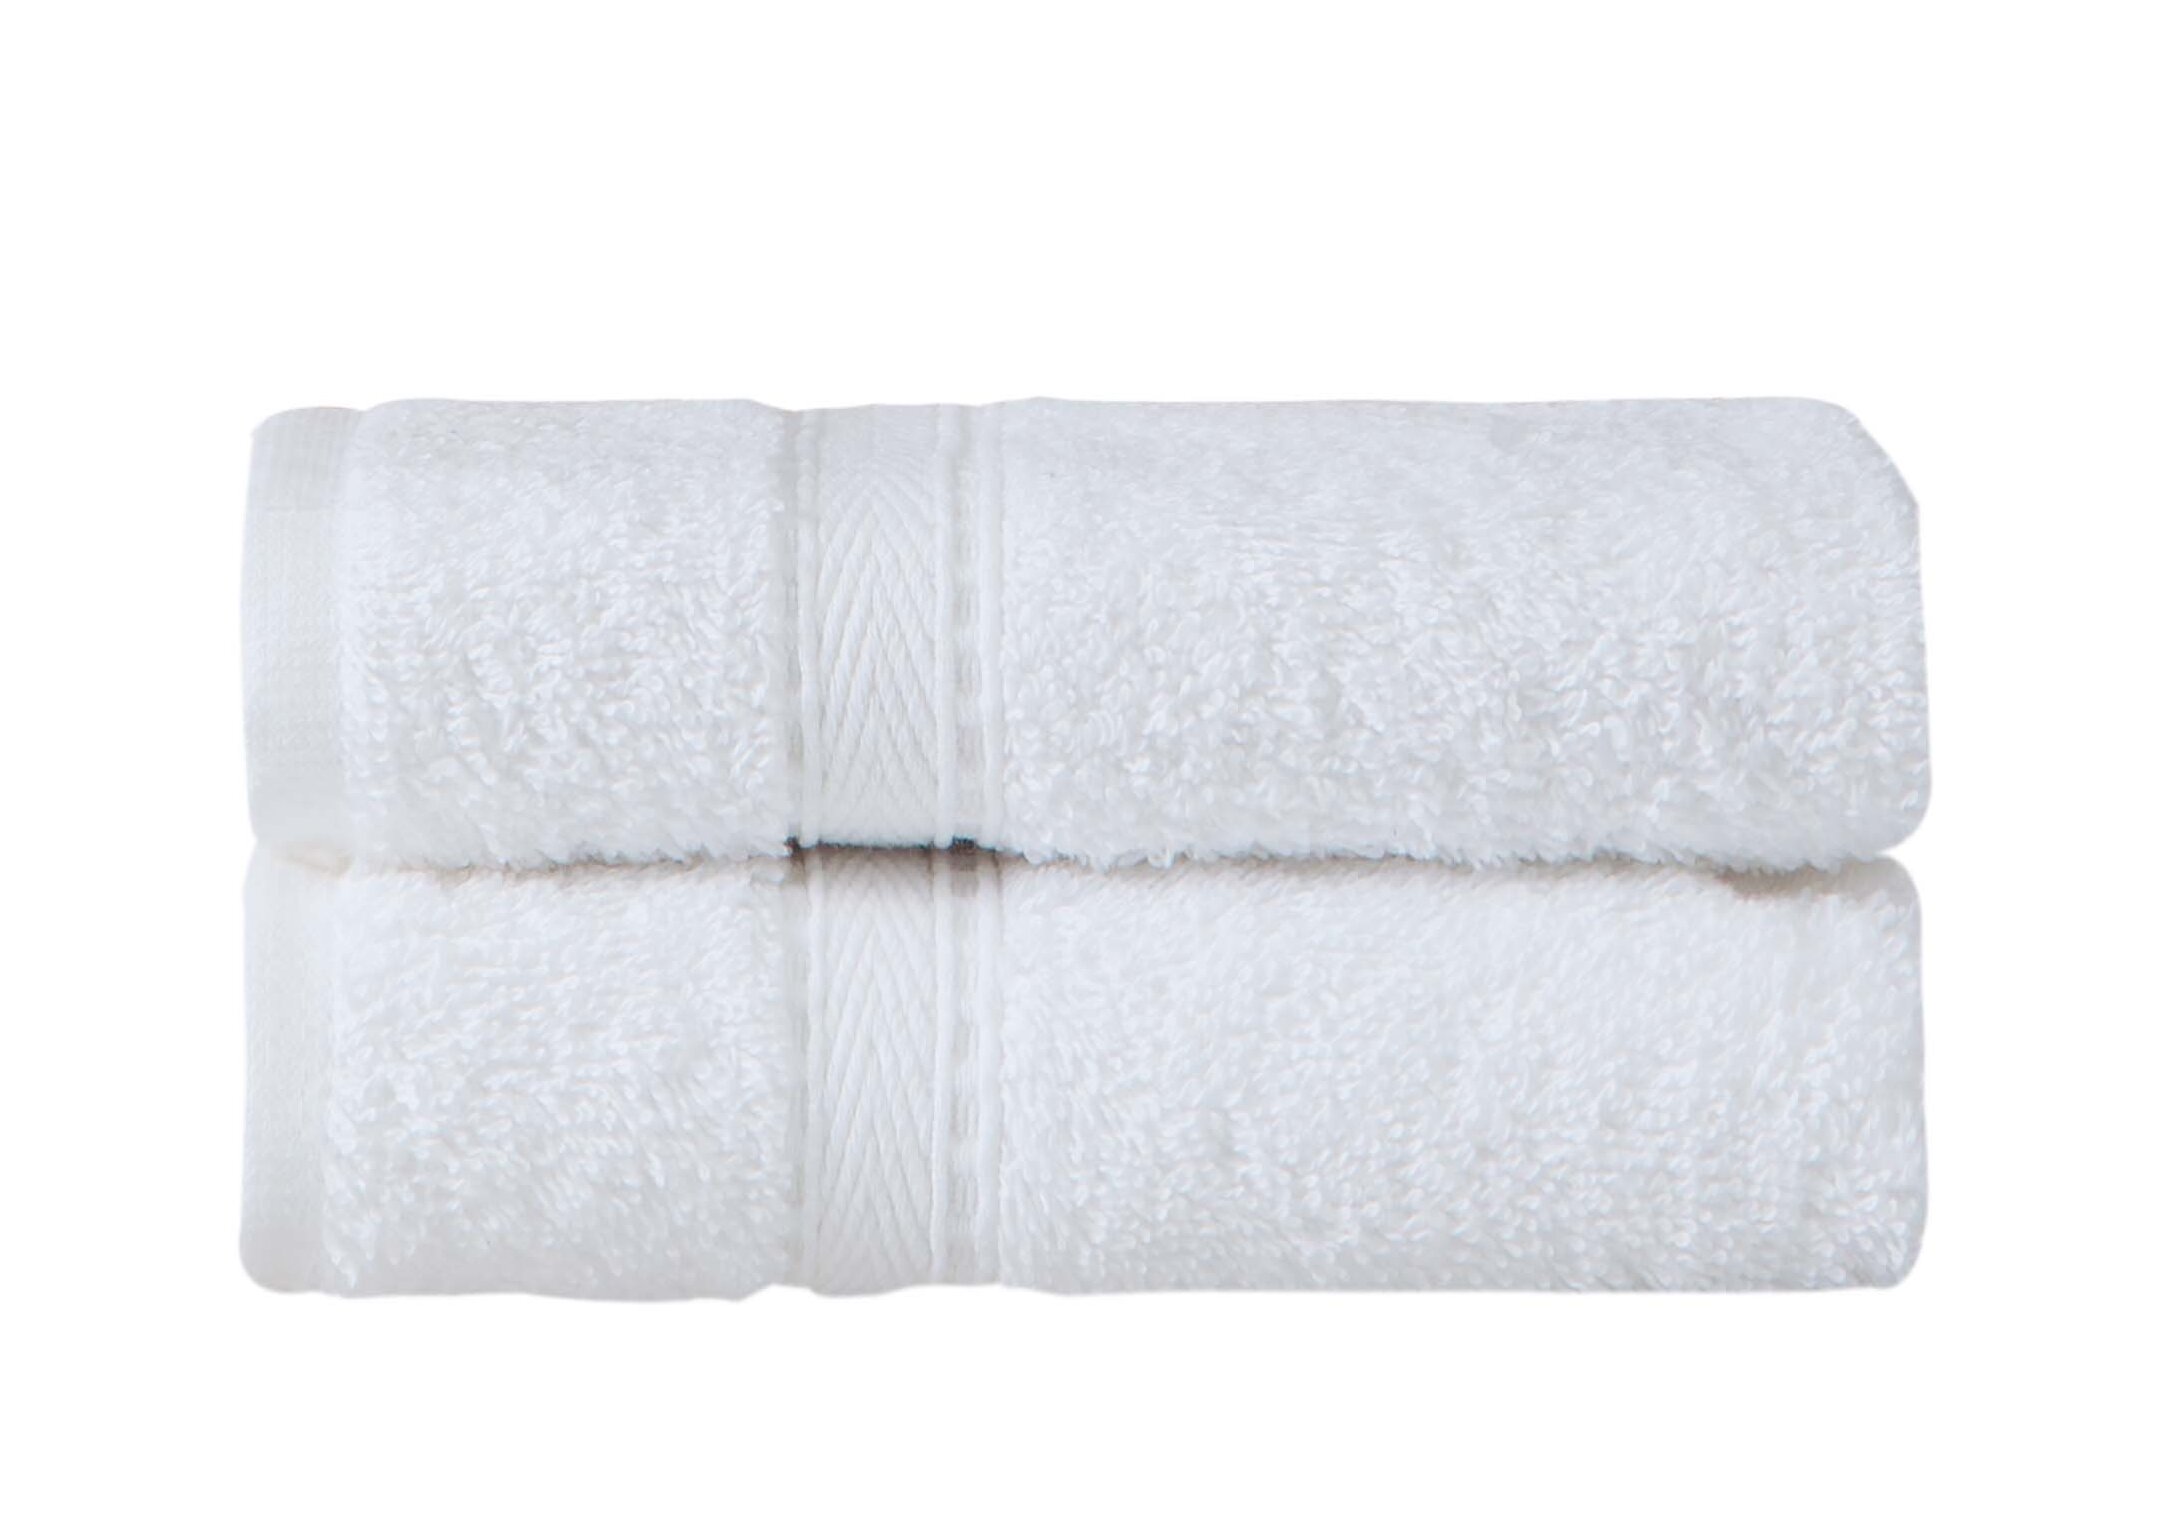 The Company Store Company Cotton 6-Piece Kelly Green Turkish Cotton Bath Towel Set